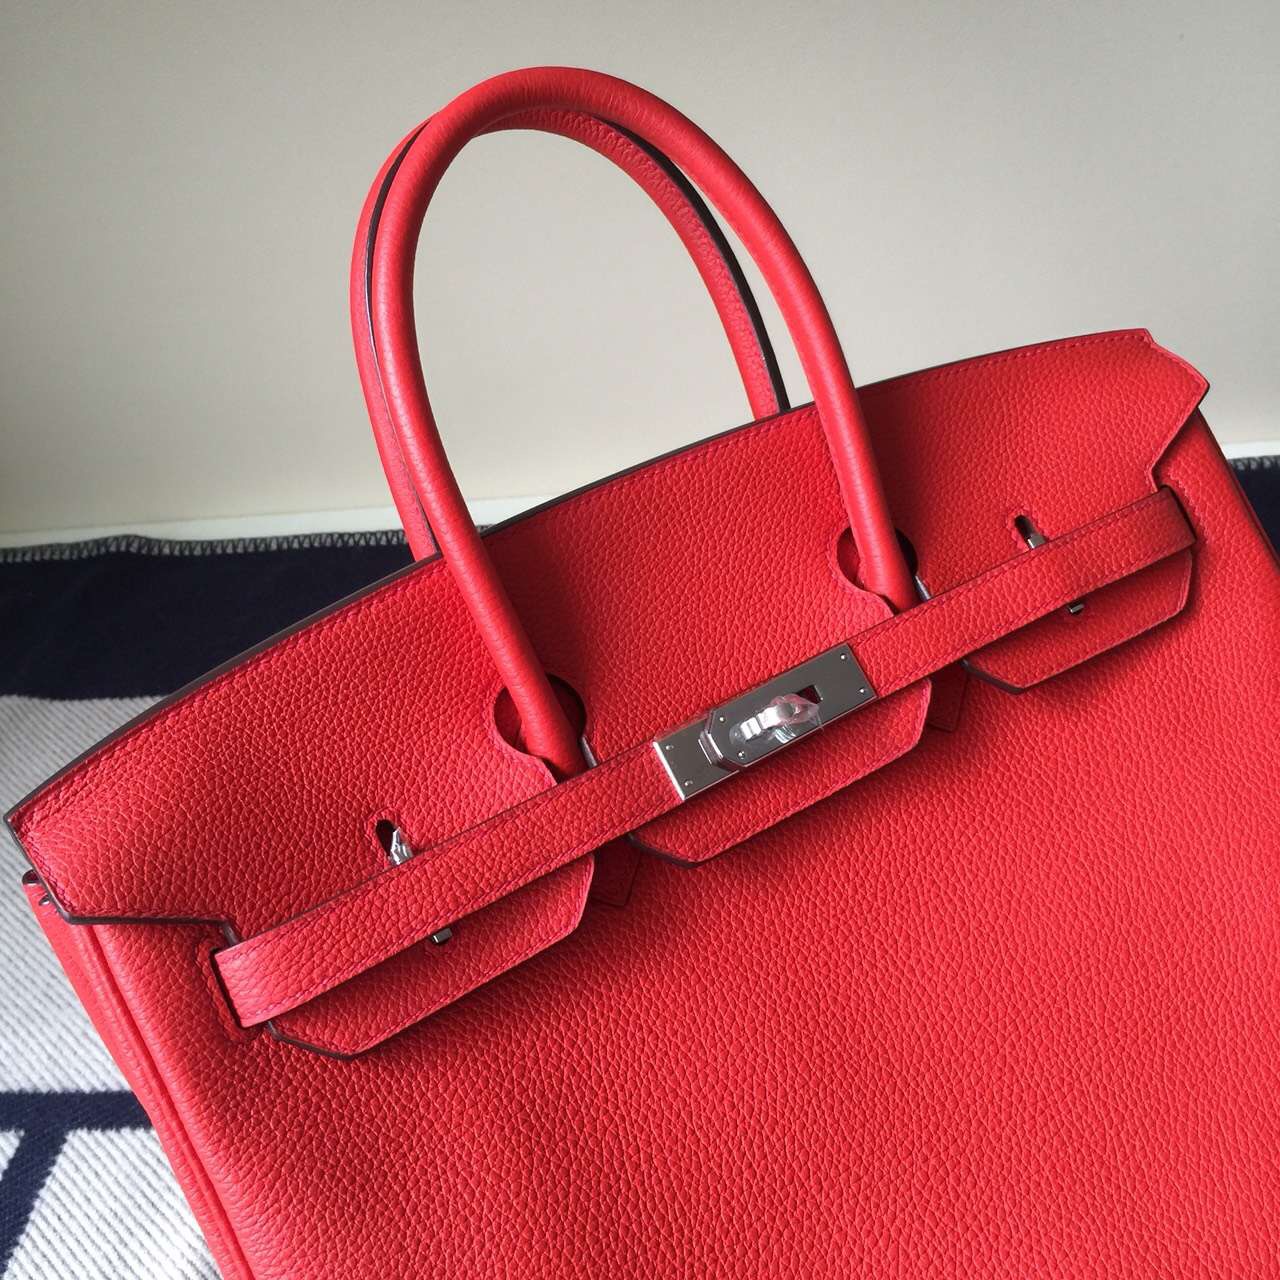 Hand Stitching Hermes Togo Calfskin Leather Birkin Bag 35cm in A5 Azalea Red